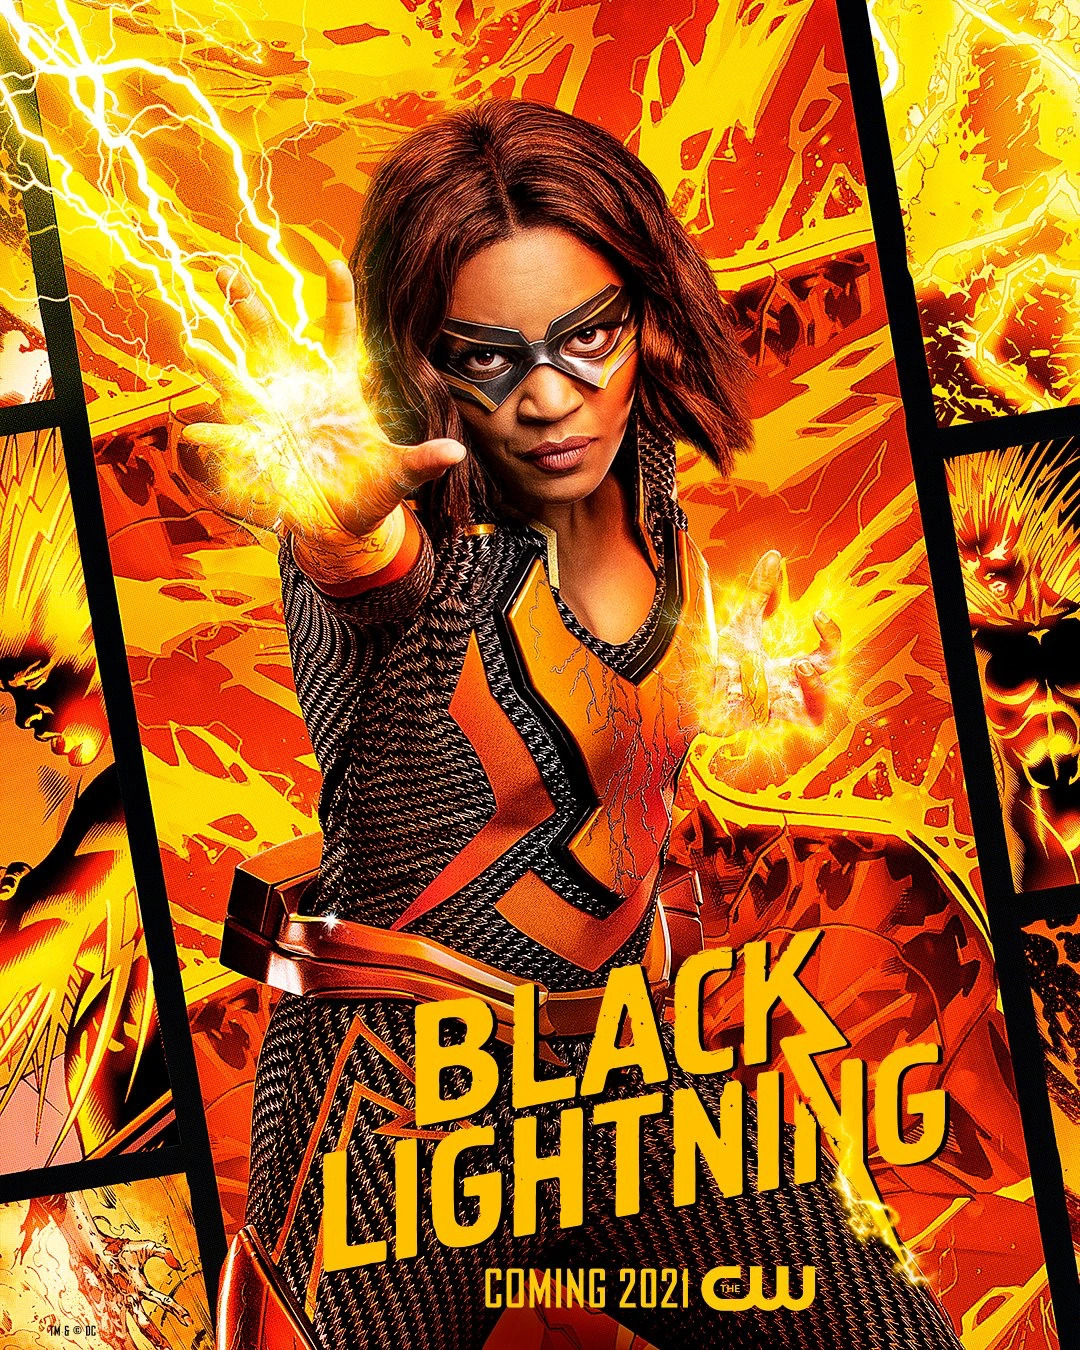 Extra Large TV Poster Image for Black Lightning (#14 of 14)